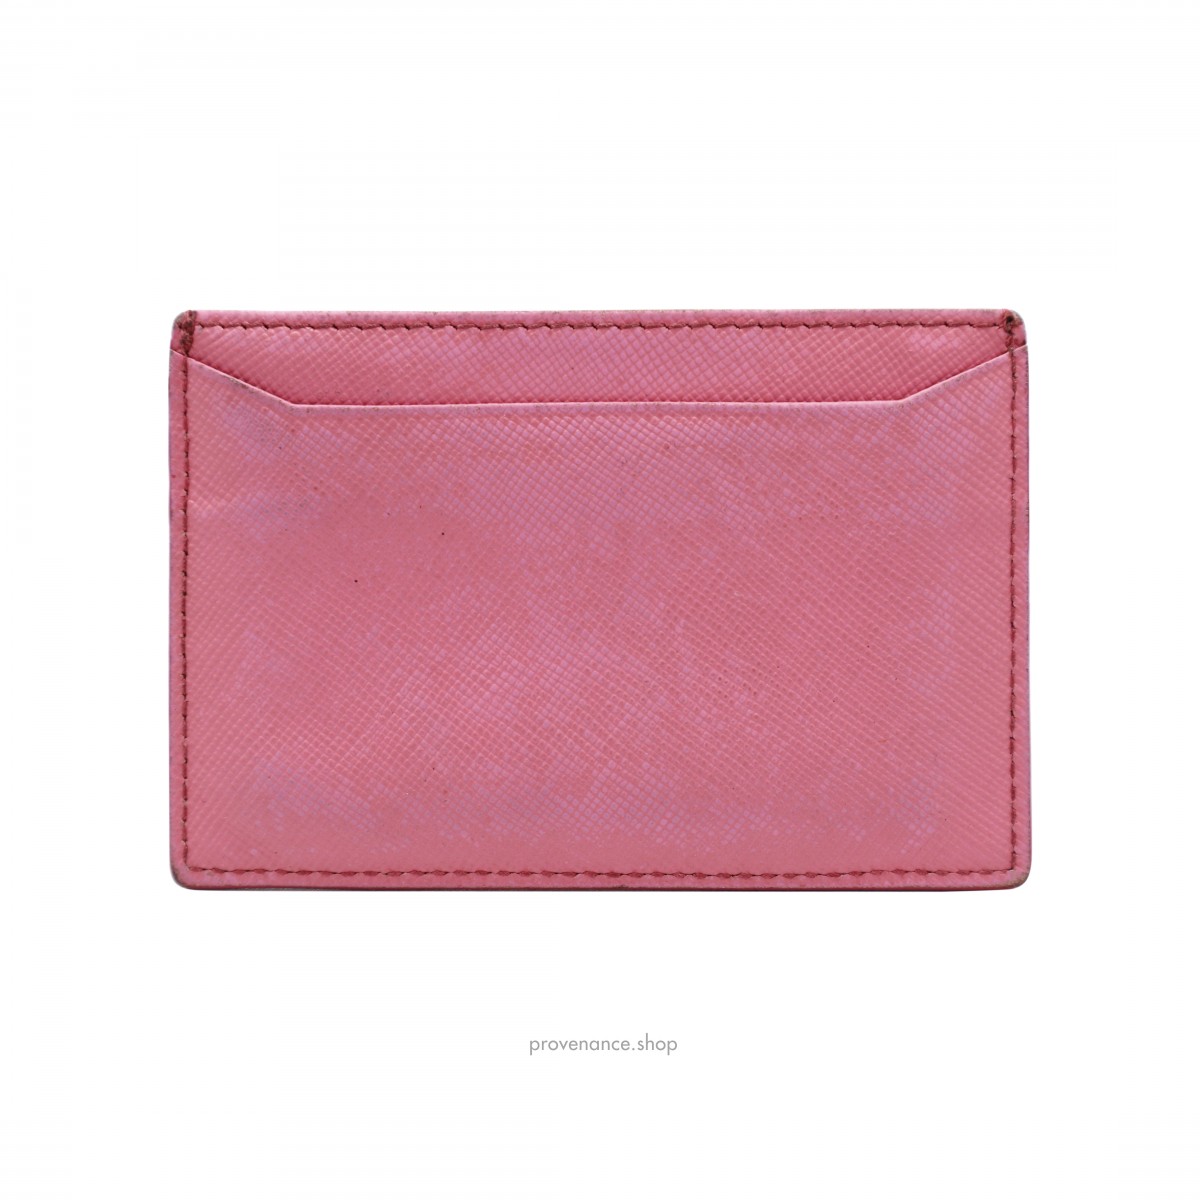 Prada Cardholder Wallet - Pink Saffiano Leather - 2